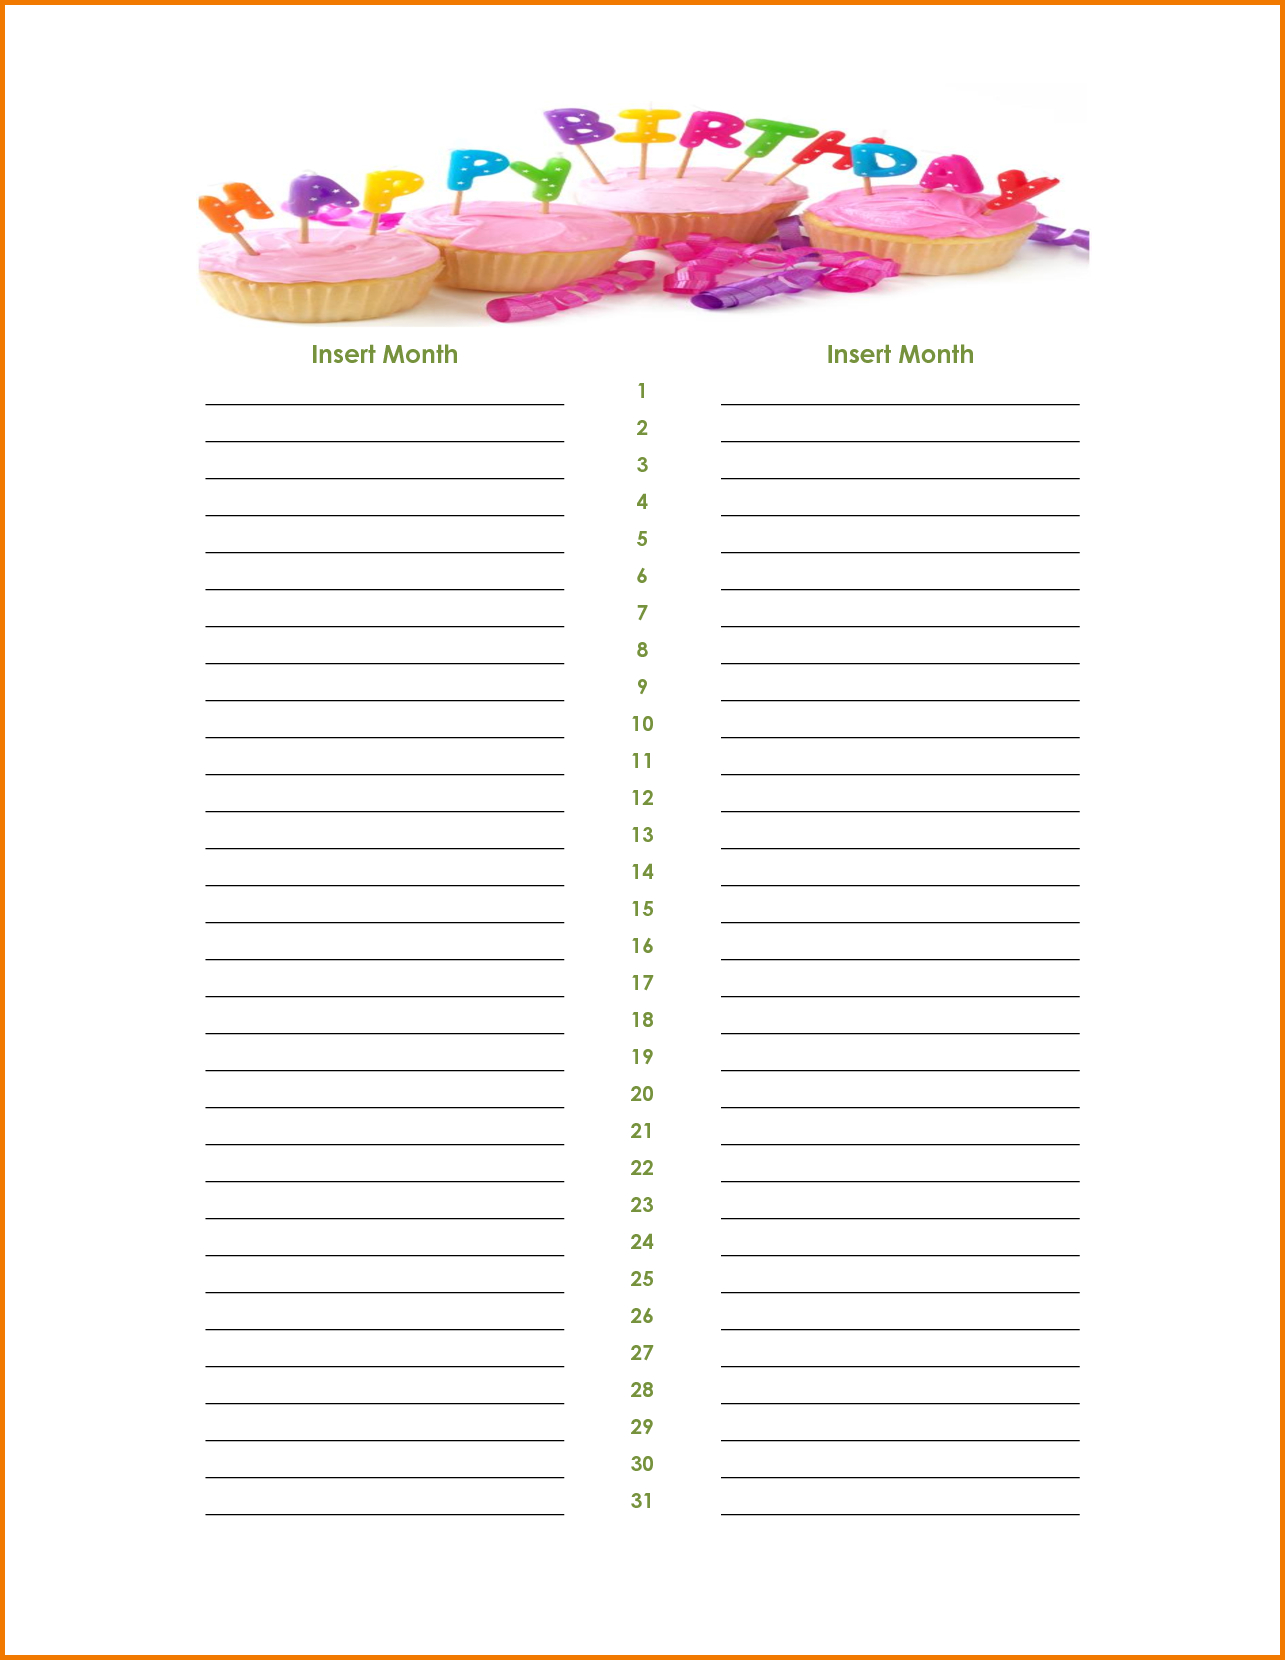 Birthday Calendar Word Template | Birthday Charts, Birthday with regard to Classroom Birthday Calendar Template